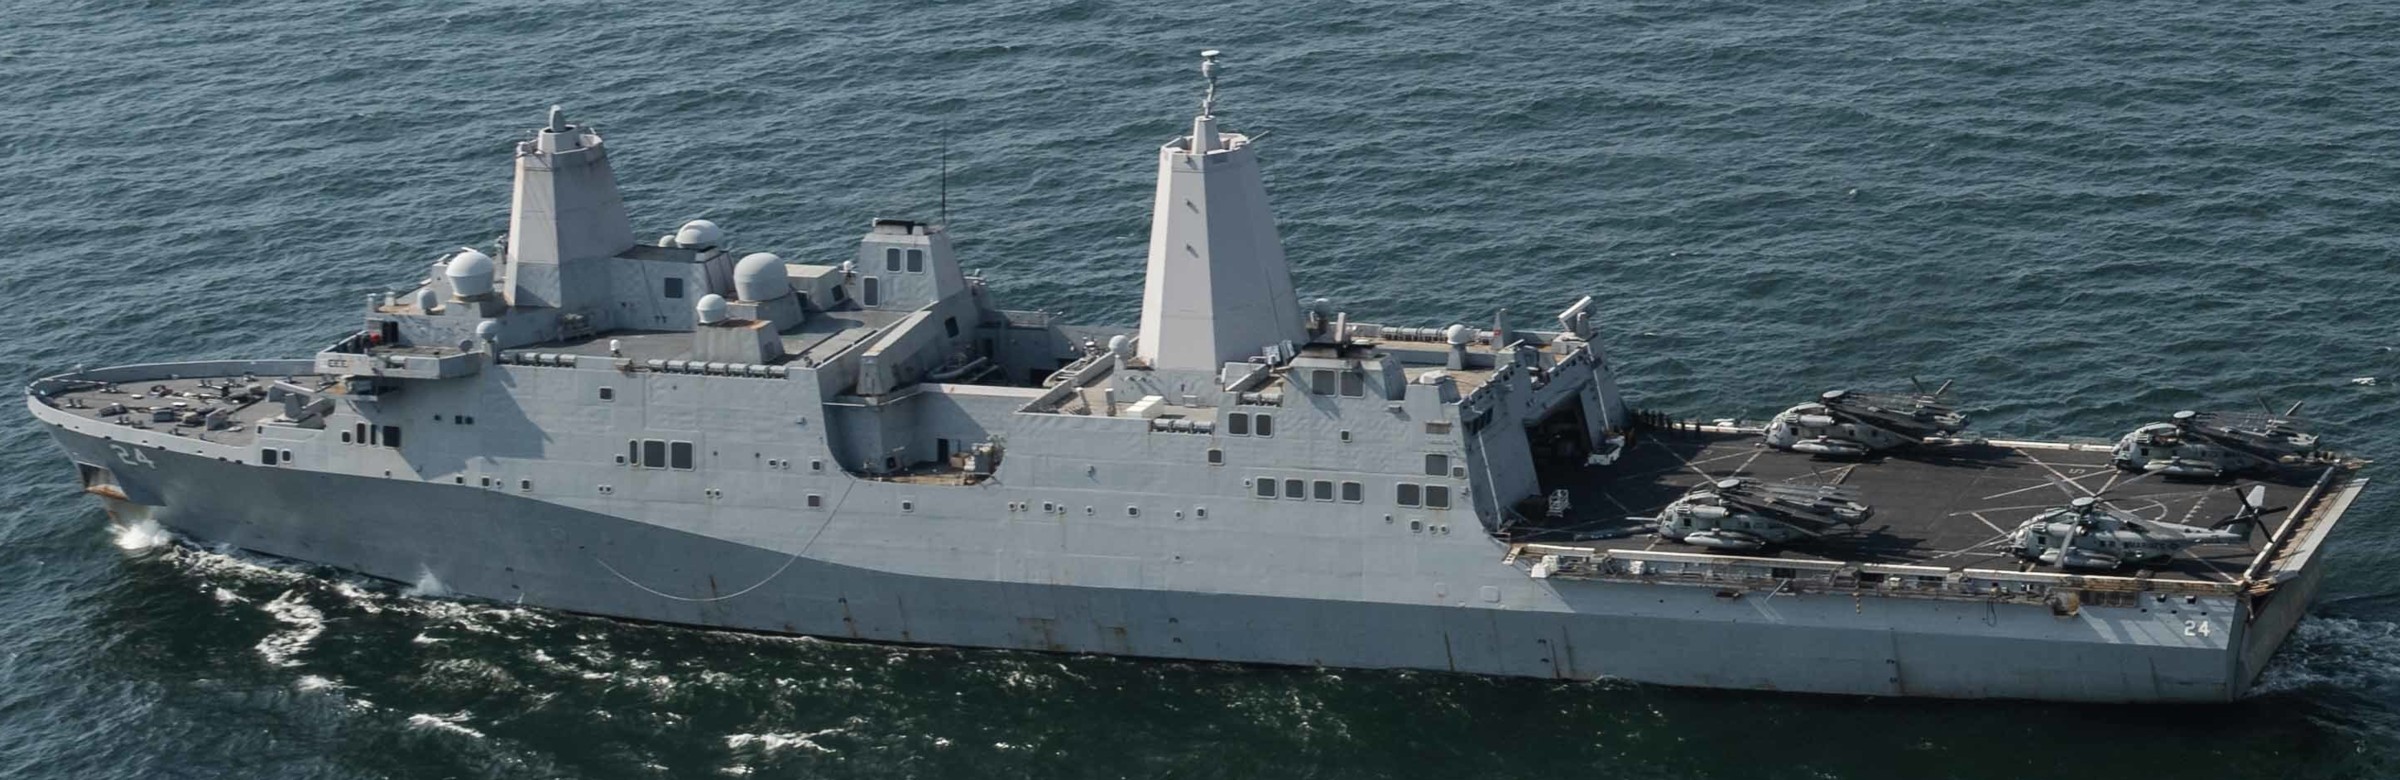 lpd-24 uss arlington amphibious transport dock landing ship us navy baltic sea baltops 136